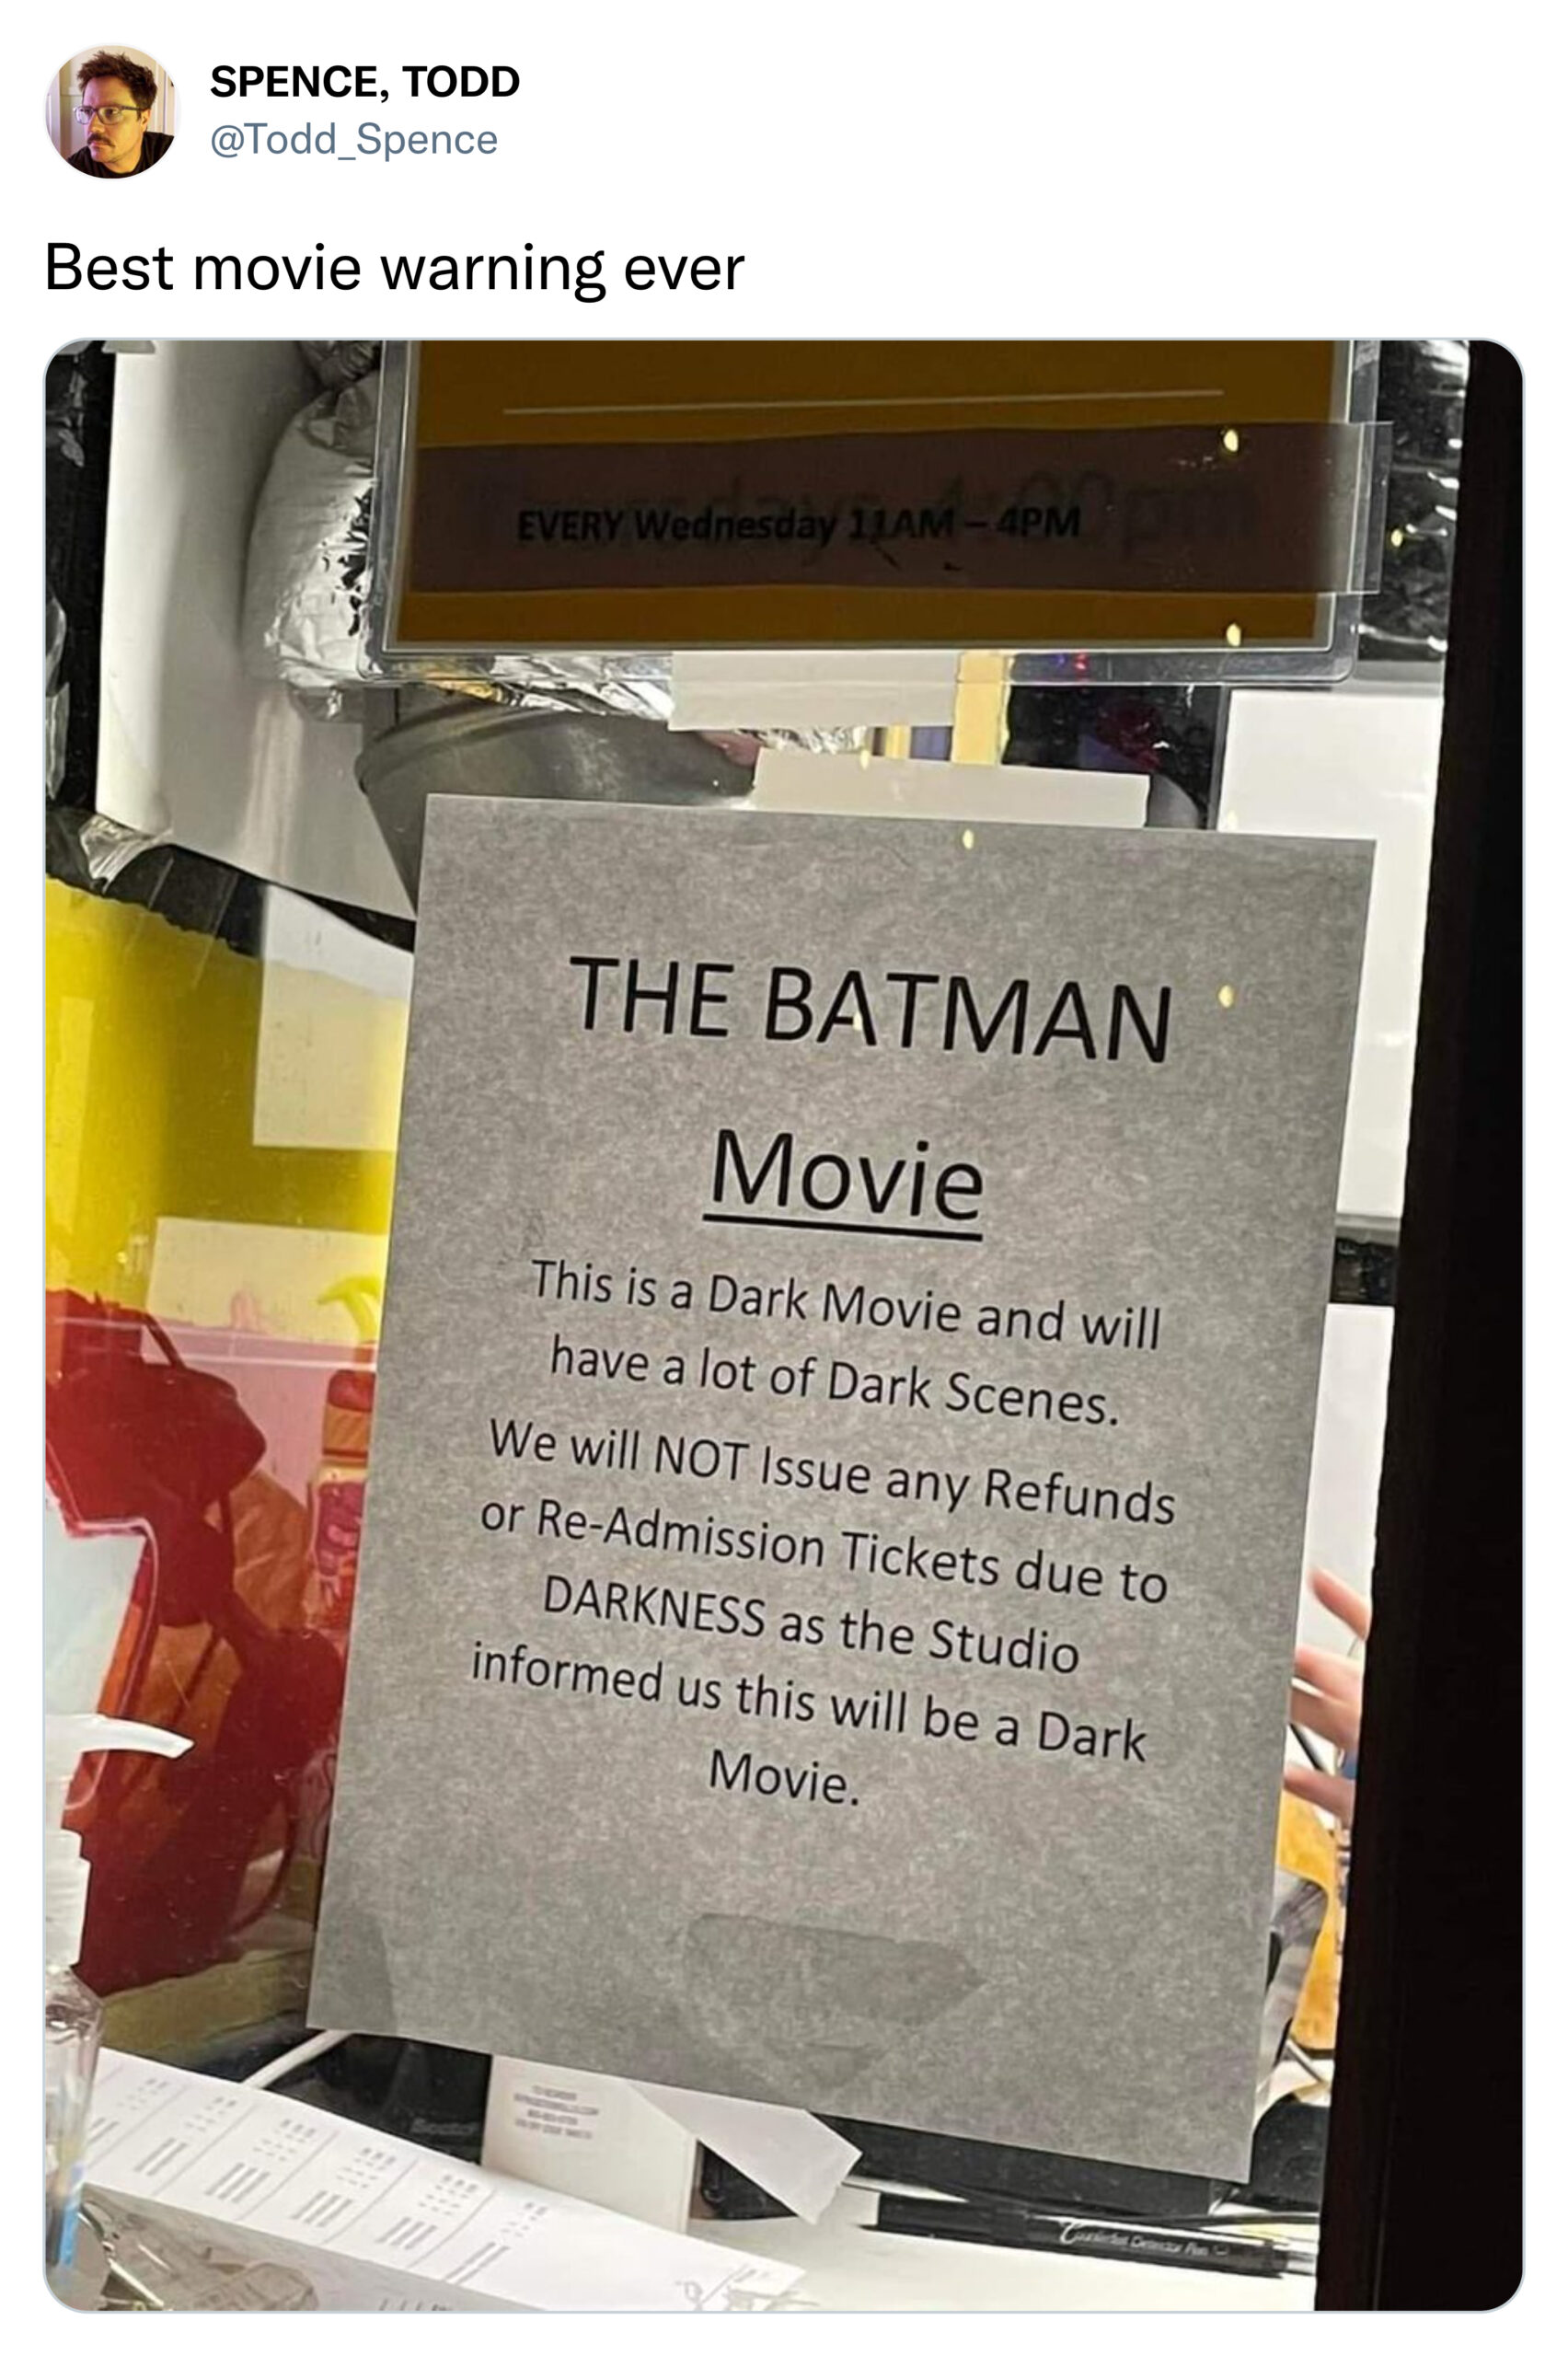 Funny Tweets - Best movie warning ever, The Batman Movie